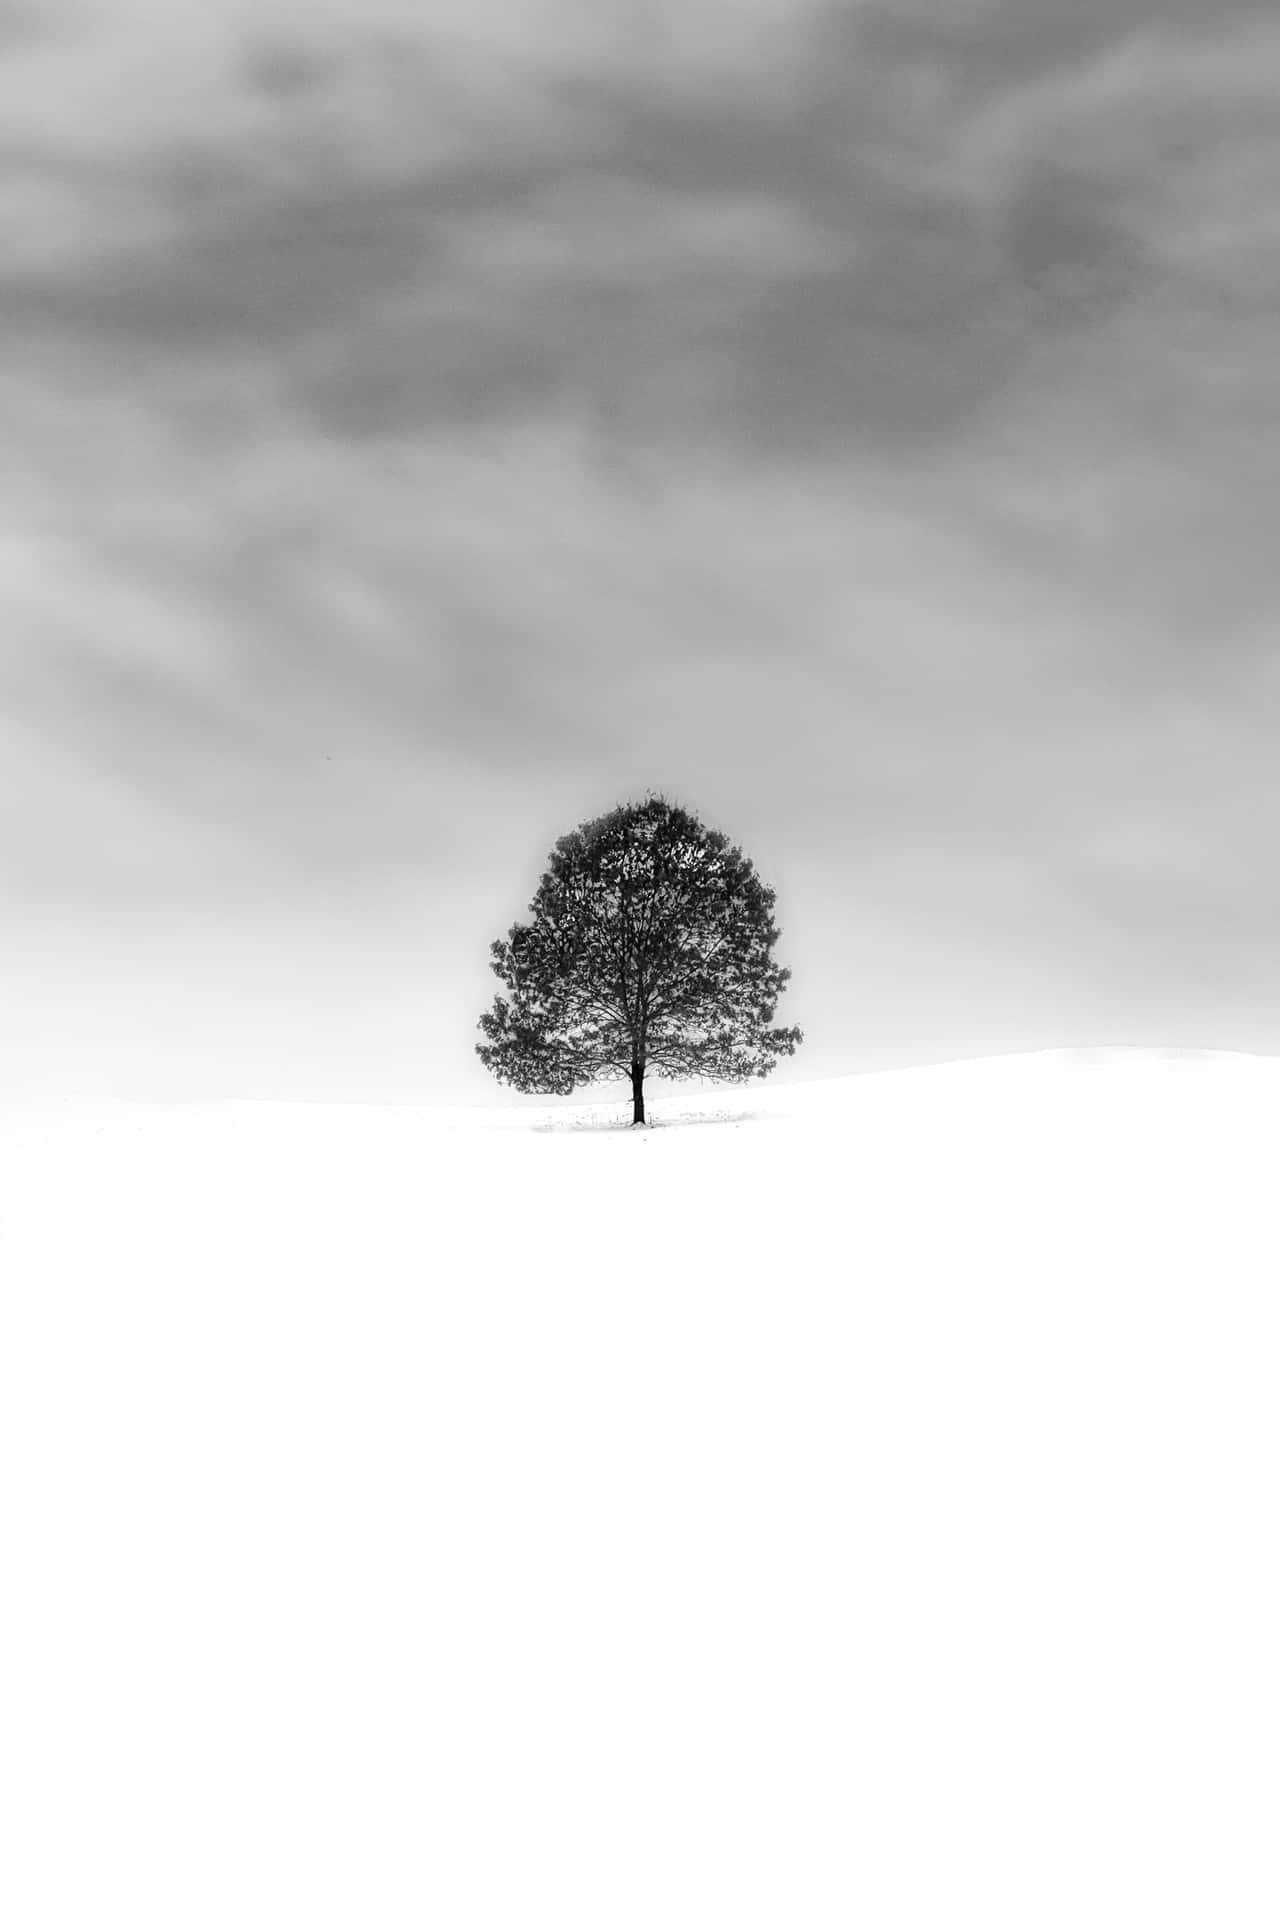 Solitary Tree In Monochrome Landscape